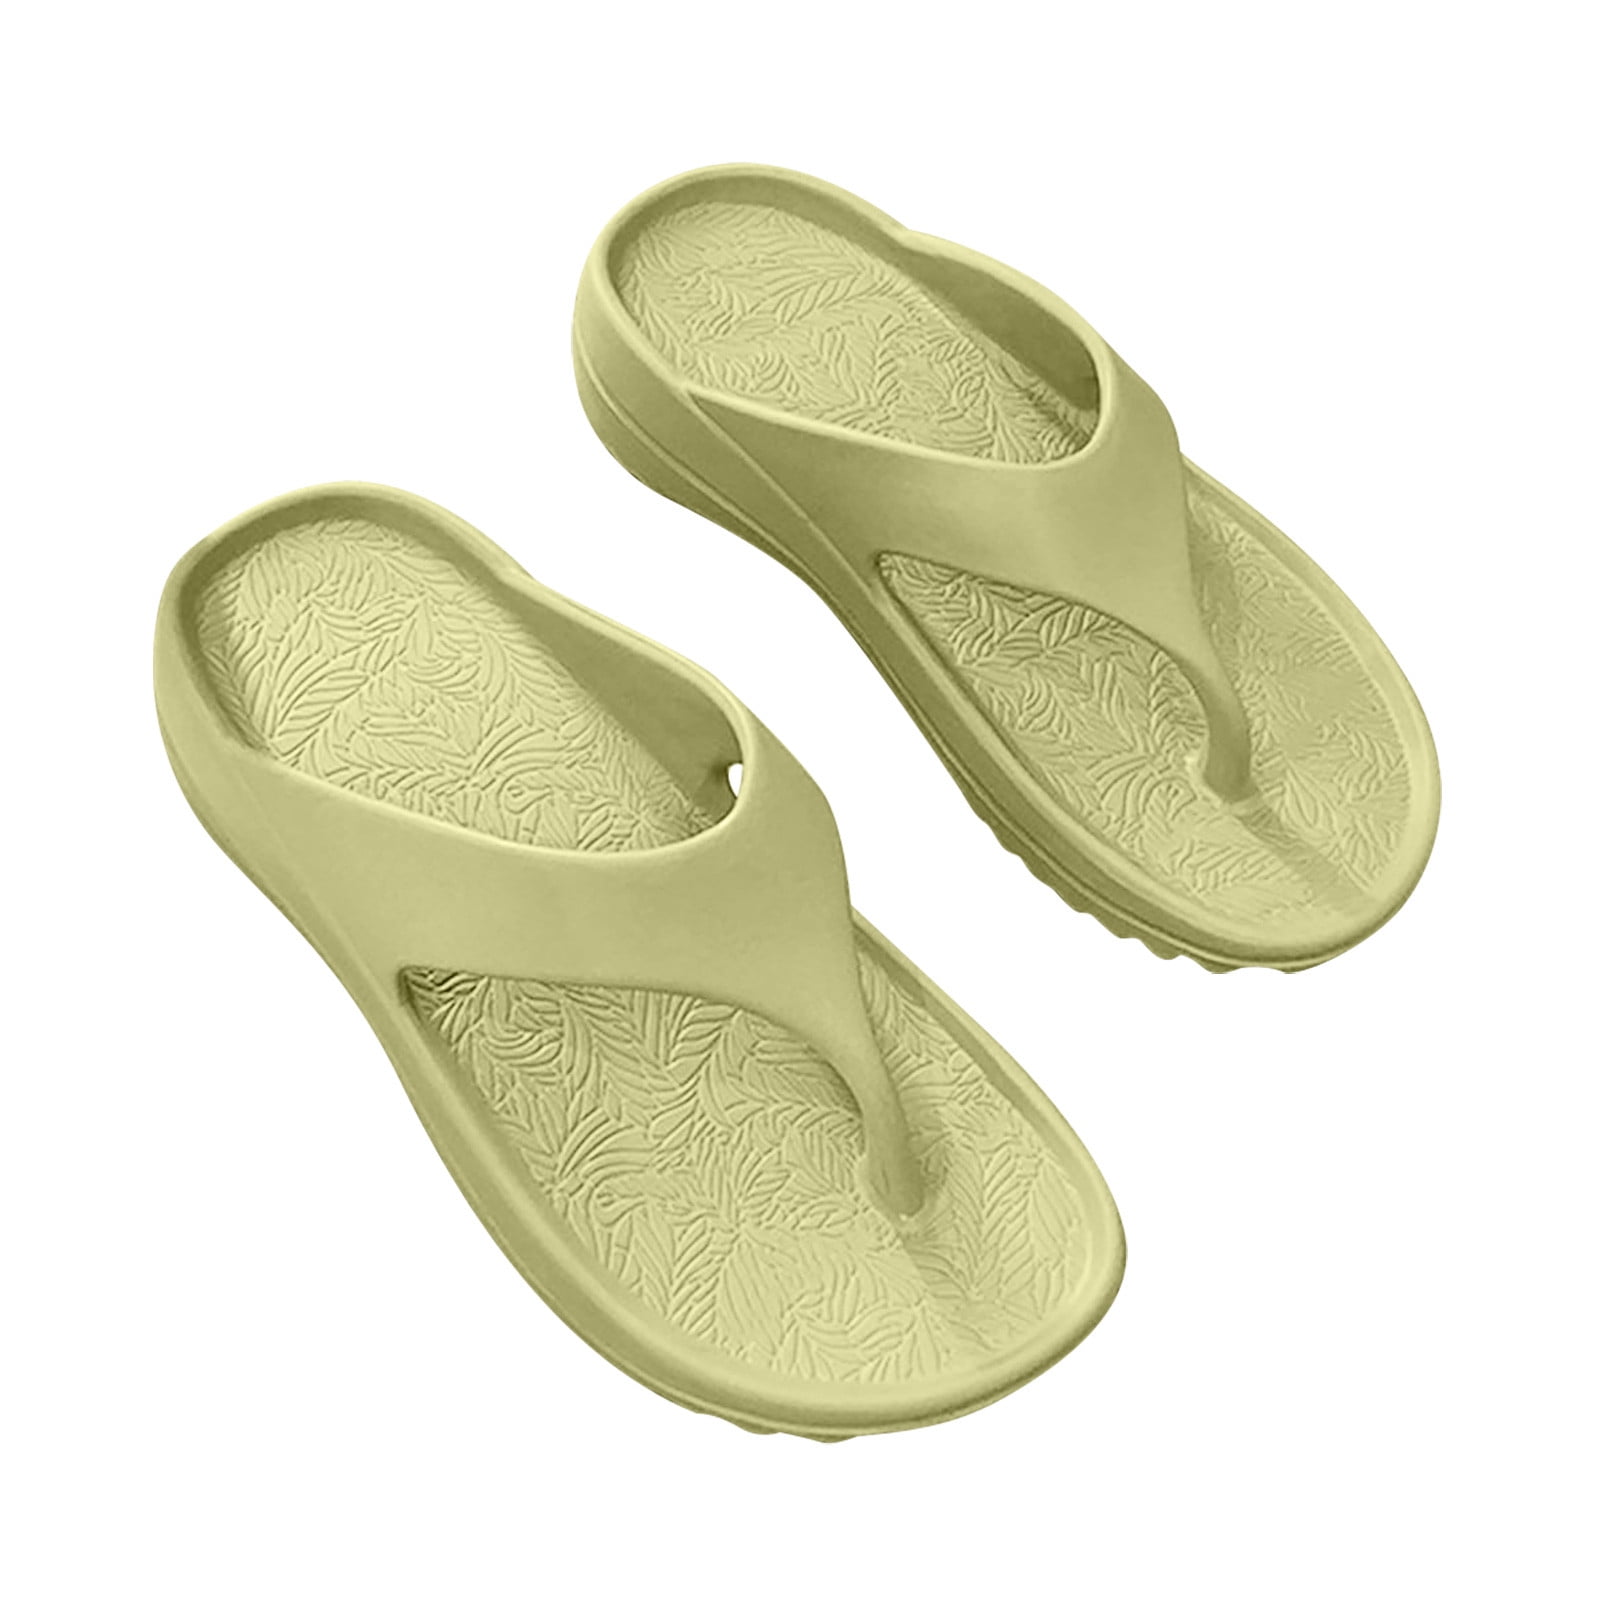 Footful Pair Cushion Pad Toe Separator Half Insert Insole For Flip-flops Sandals 